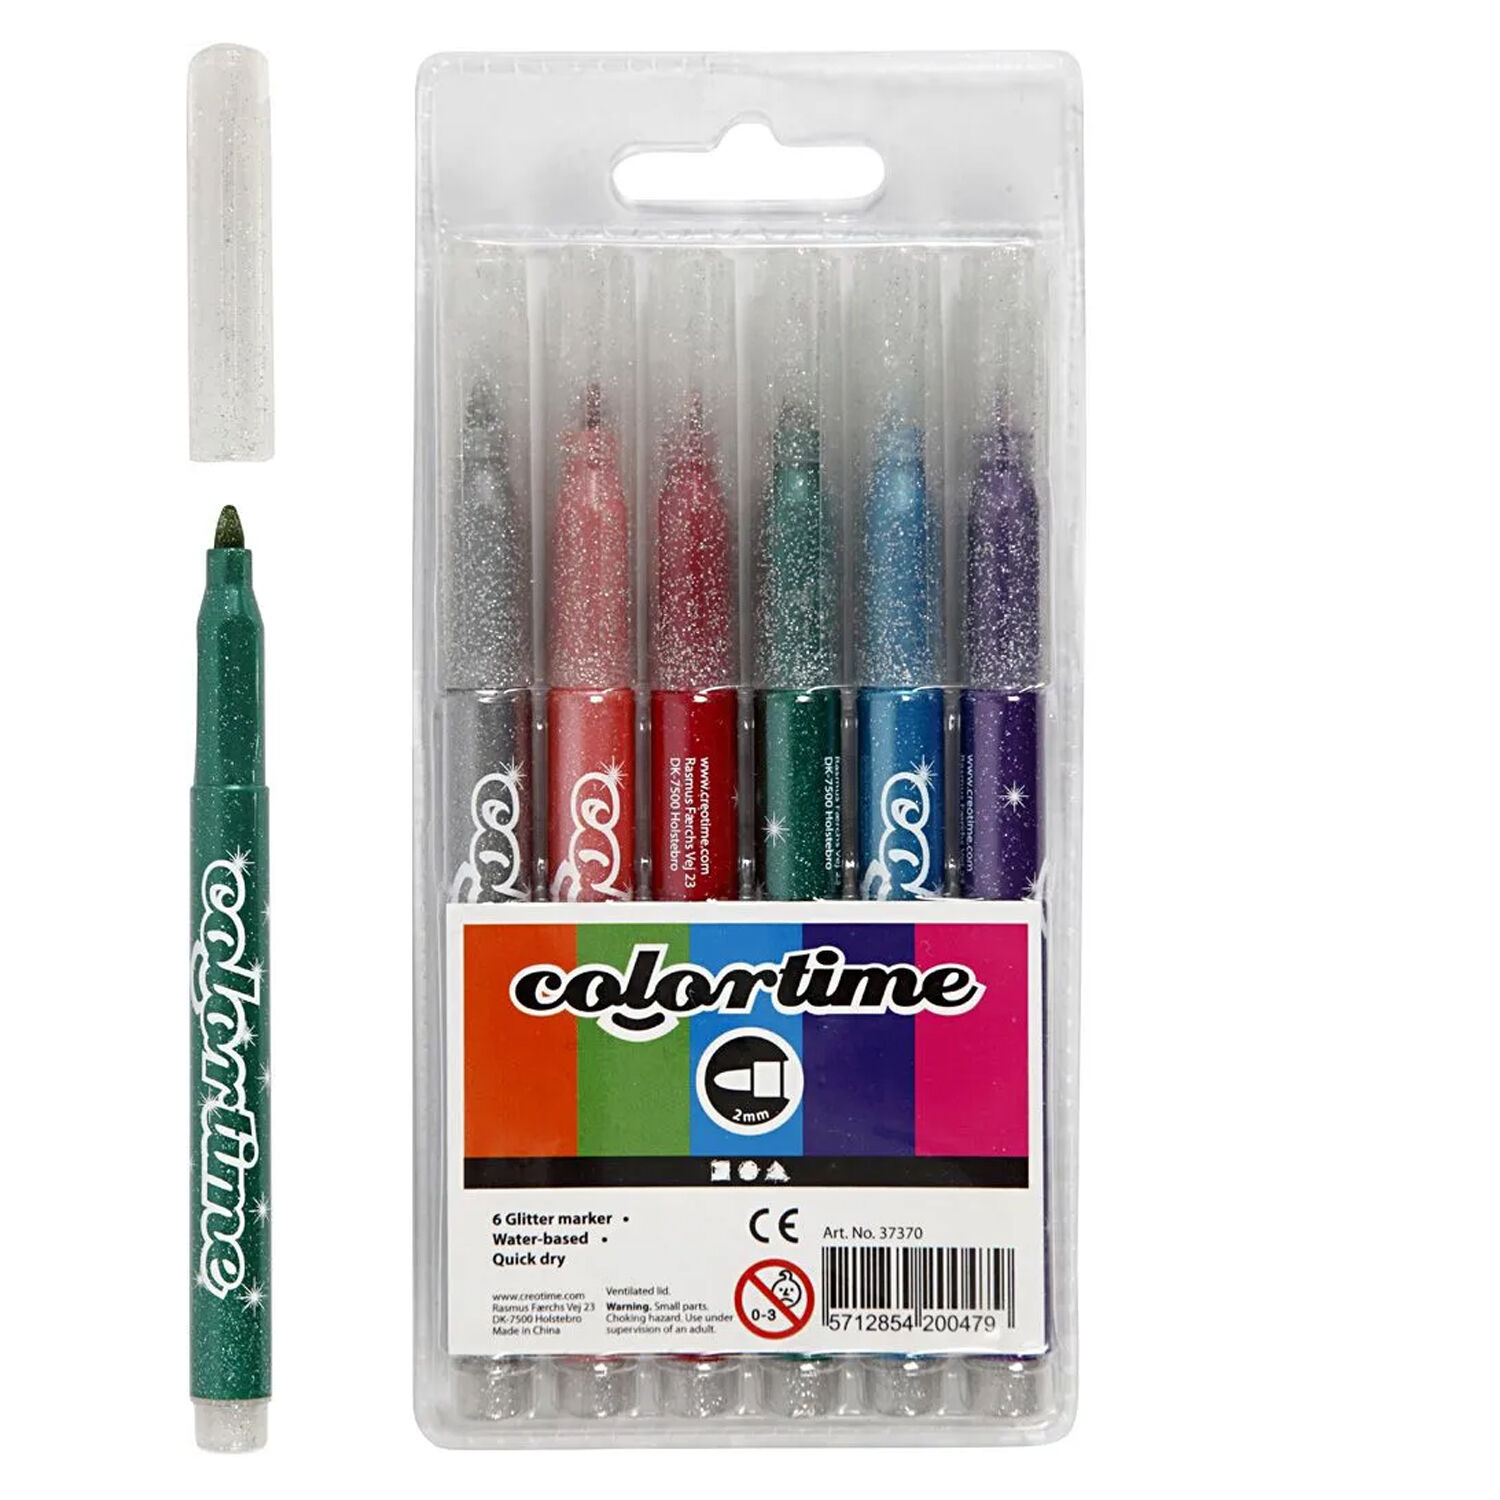 NEU Colortime Glitter Marker, Sortierte Farben, Strichstrke 2 mm, 6 Stk. Bild 2